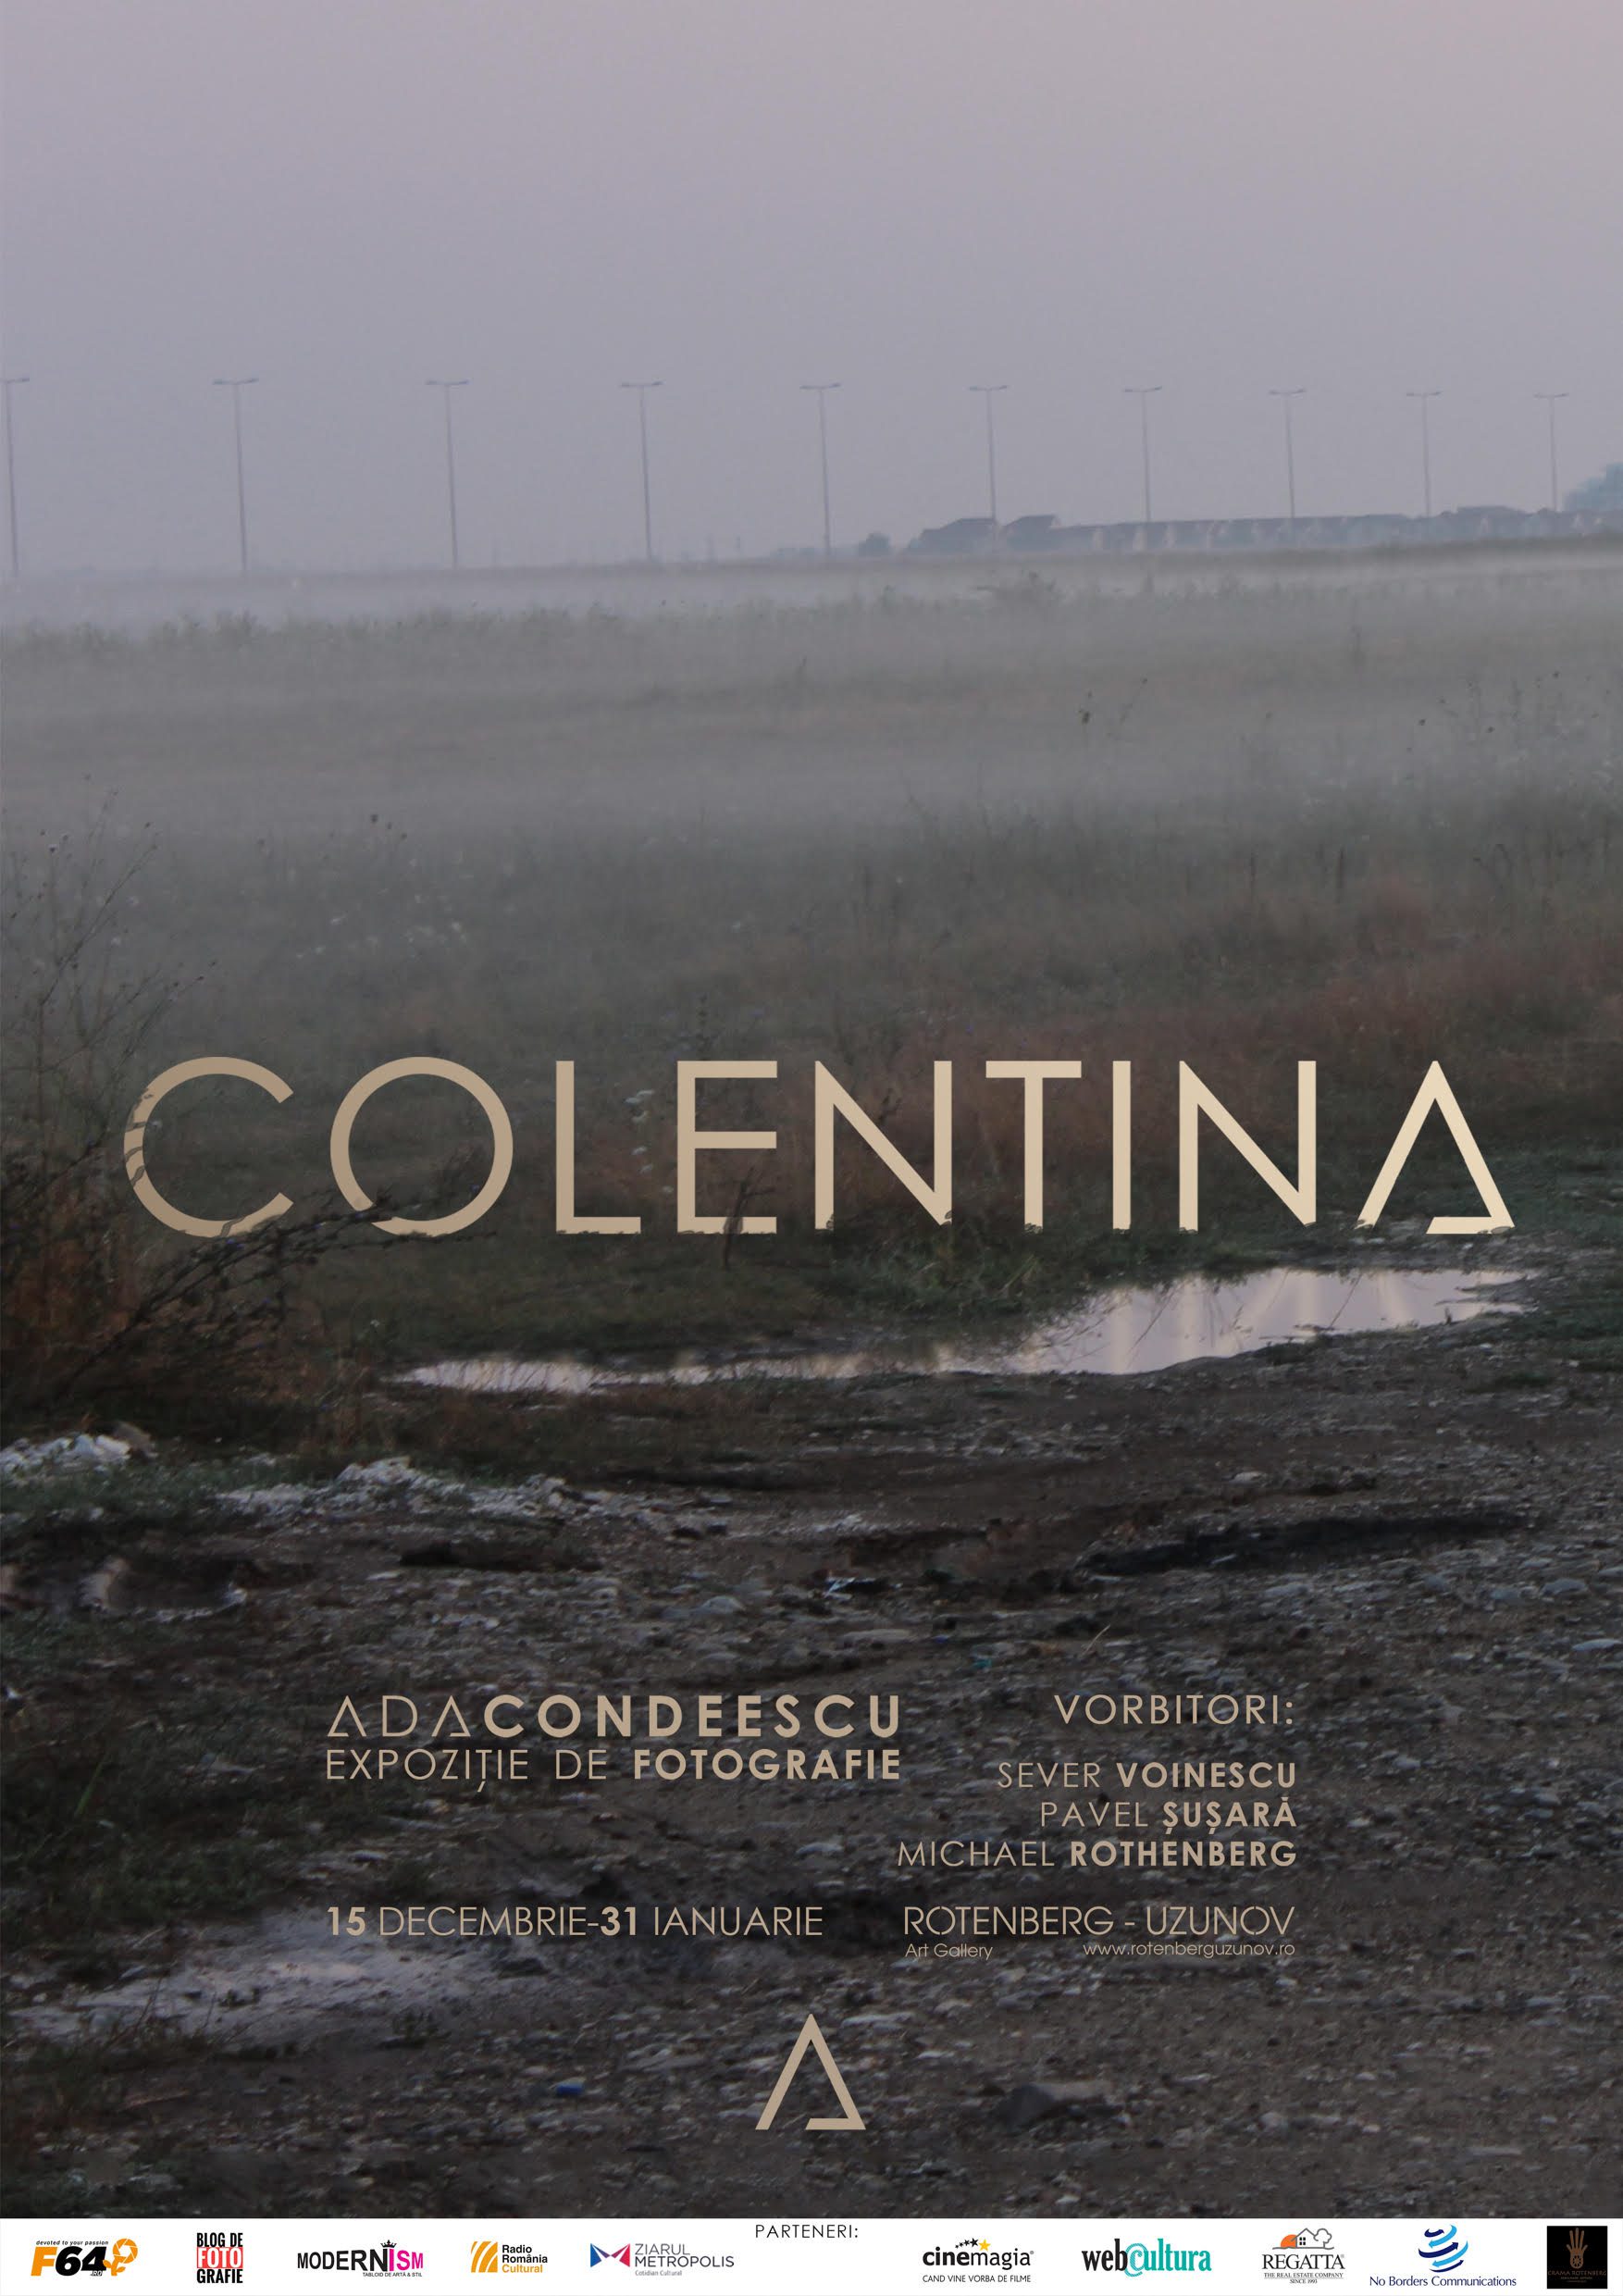  "Colentina" – Ada Condeescu, expozitie de debut